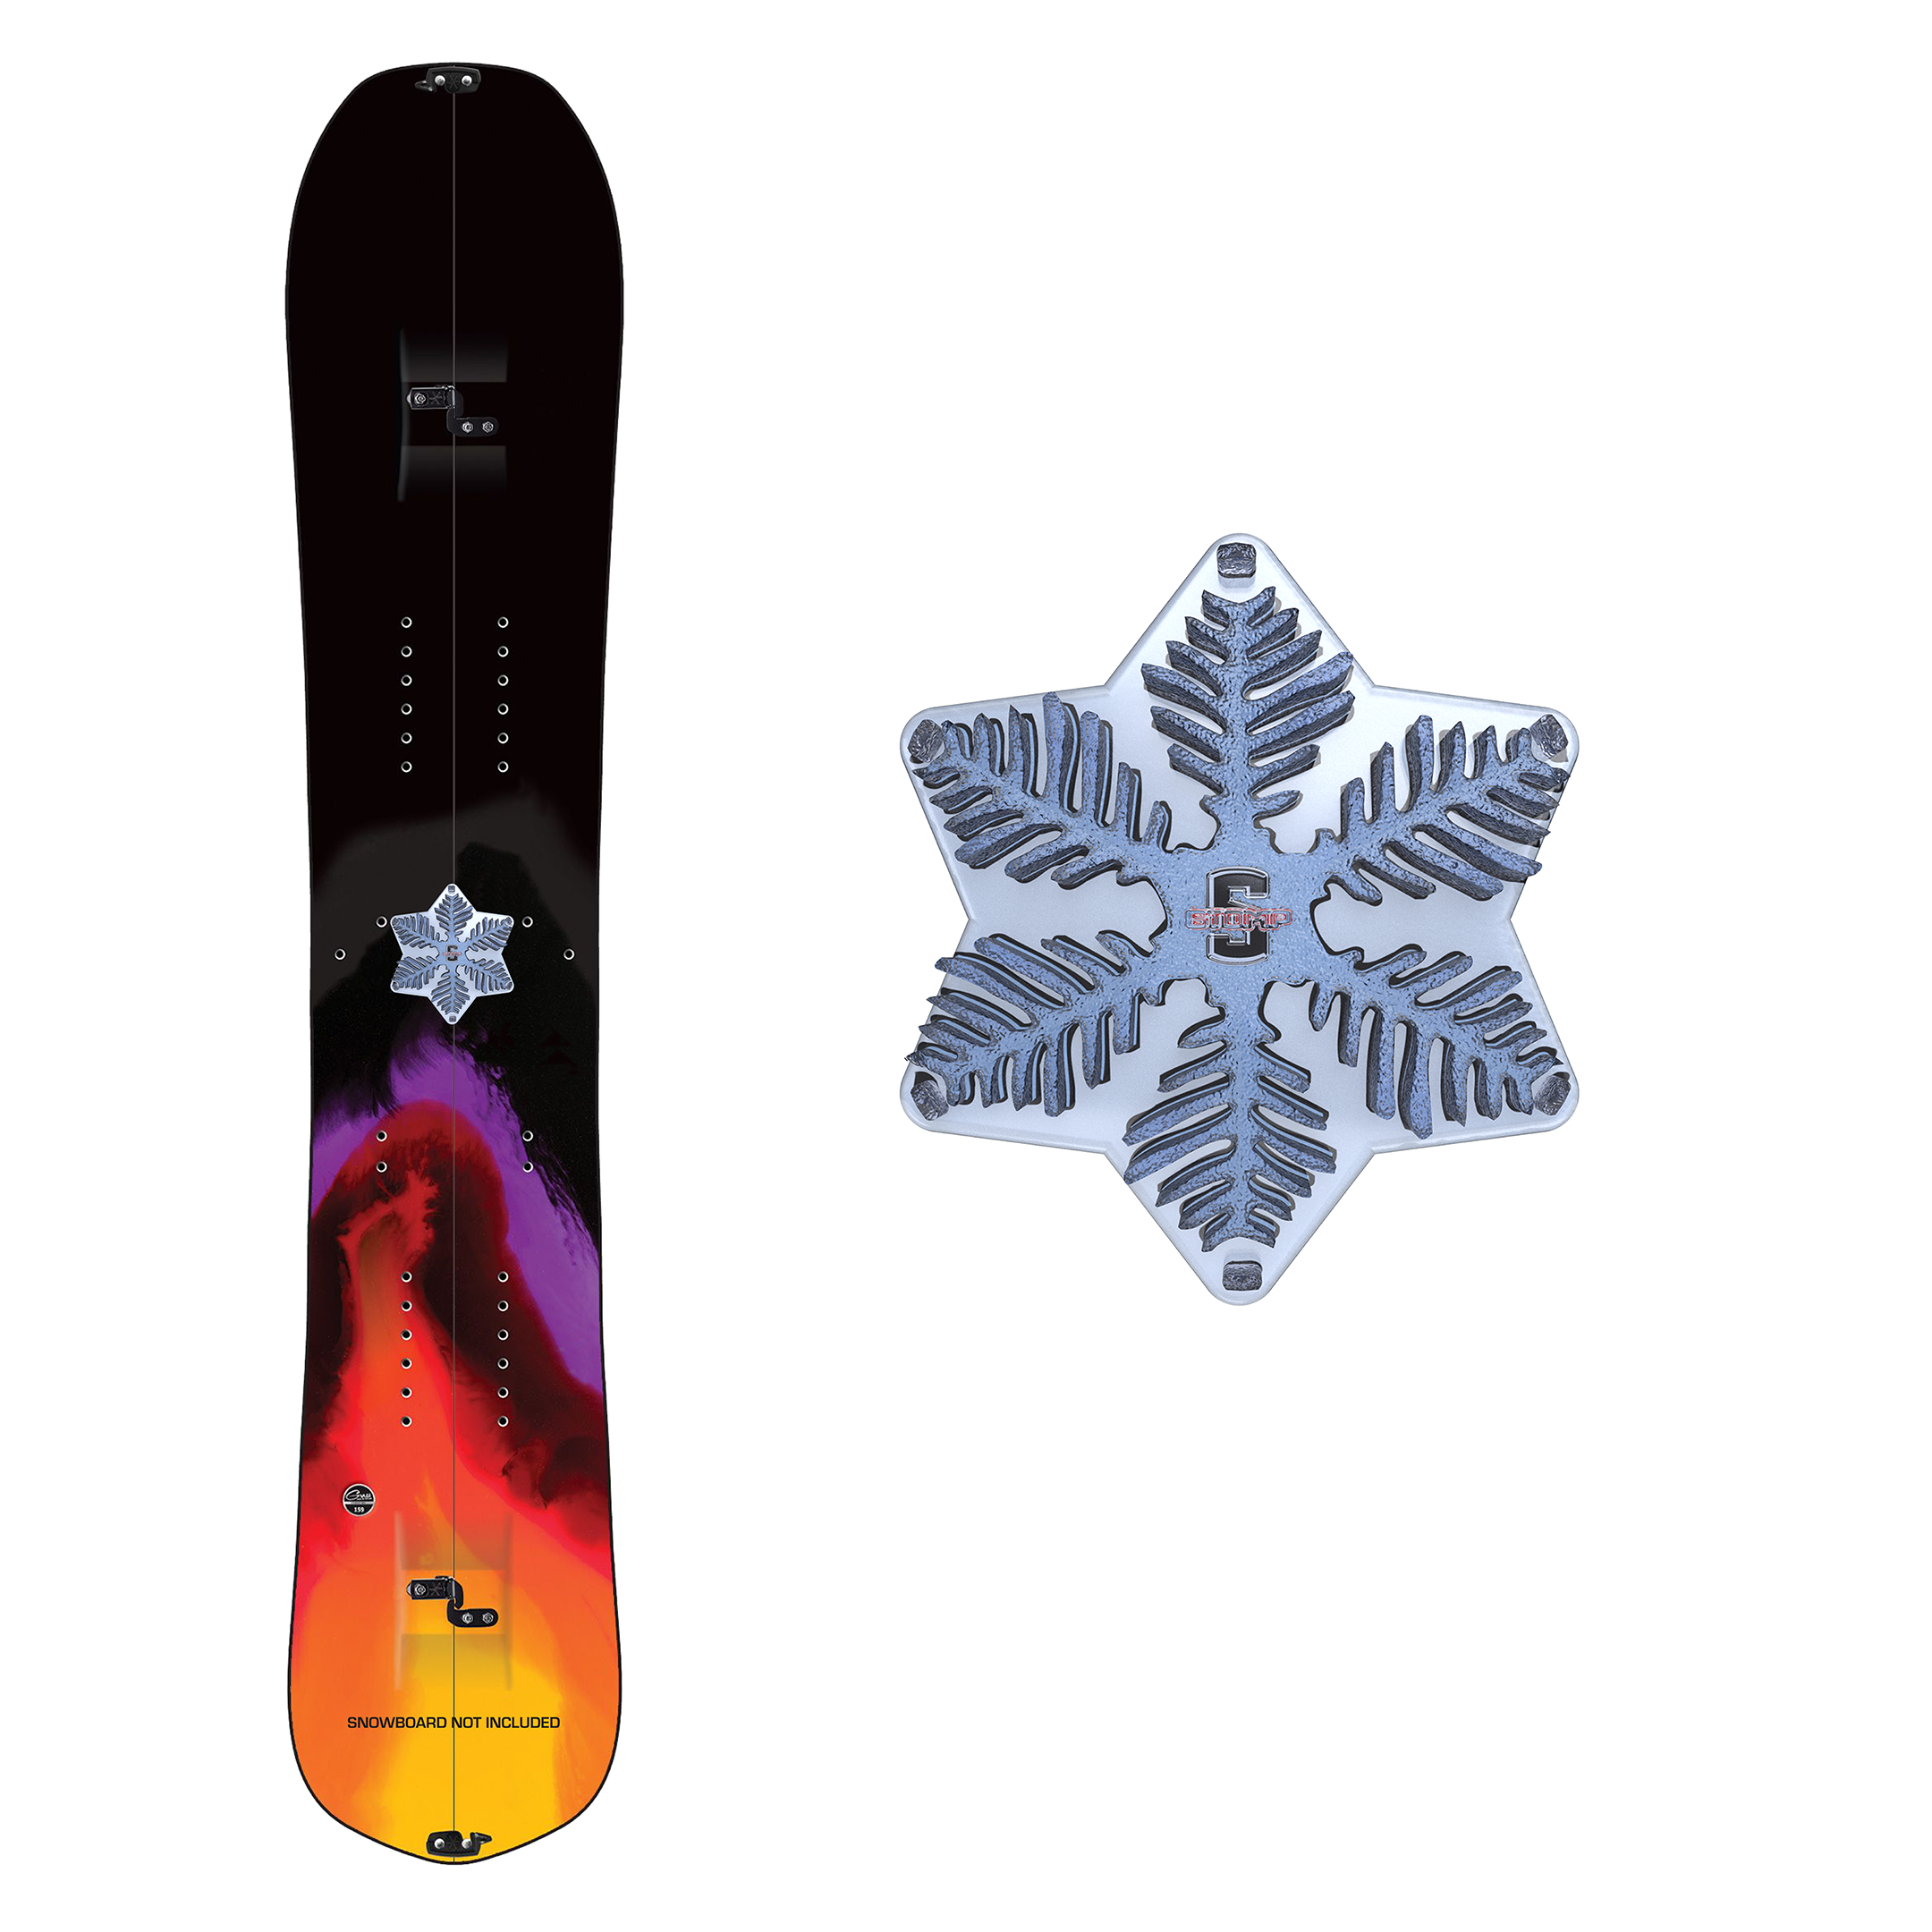 Snowboard Ski Stomp Pad, Clear Snowflake PVC Anti-Slip Grip for Outdoor  Sports